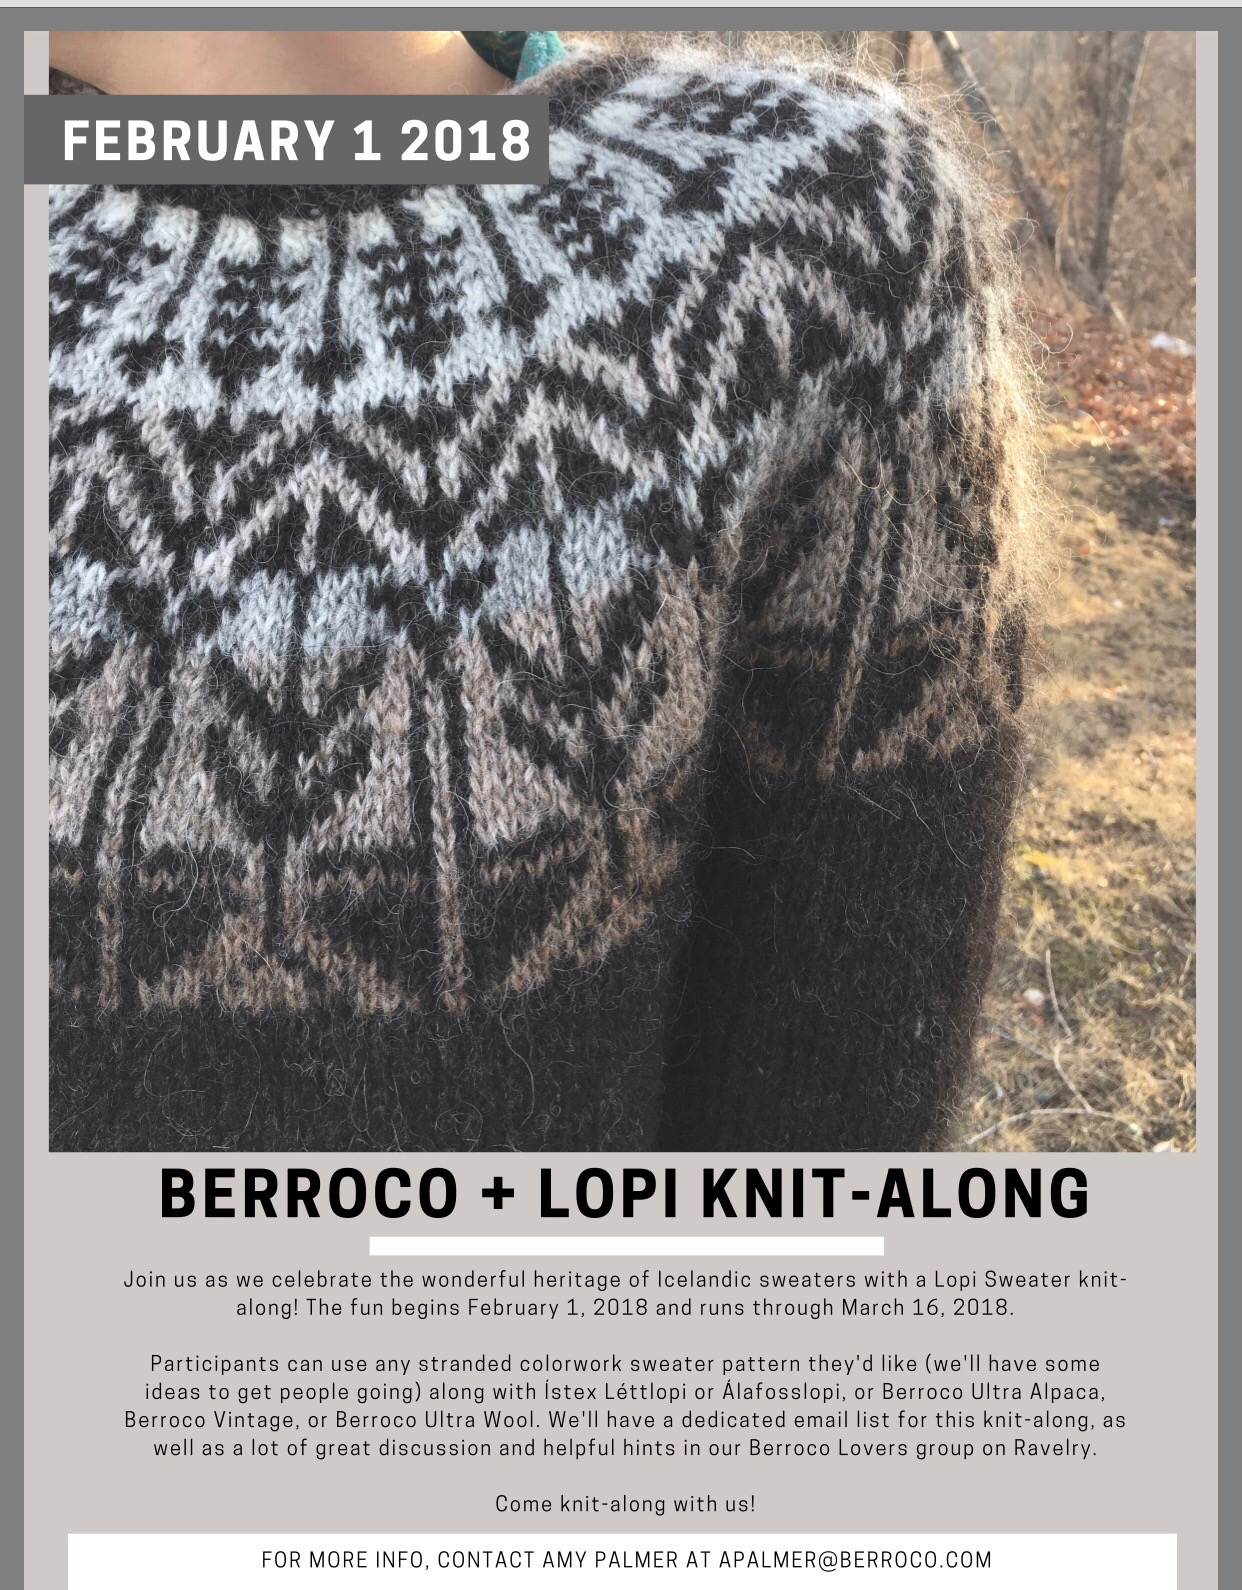 Lopi Knitting Patterns Free Pattern Fridays Friday February 2 2018 Its Groundhog Day